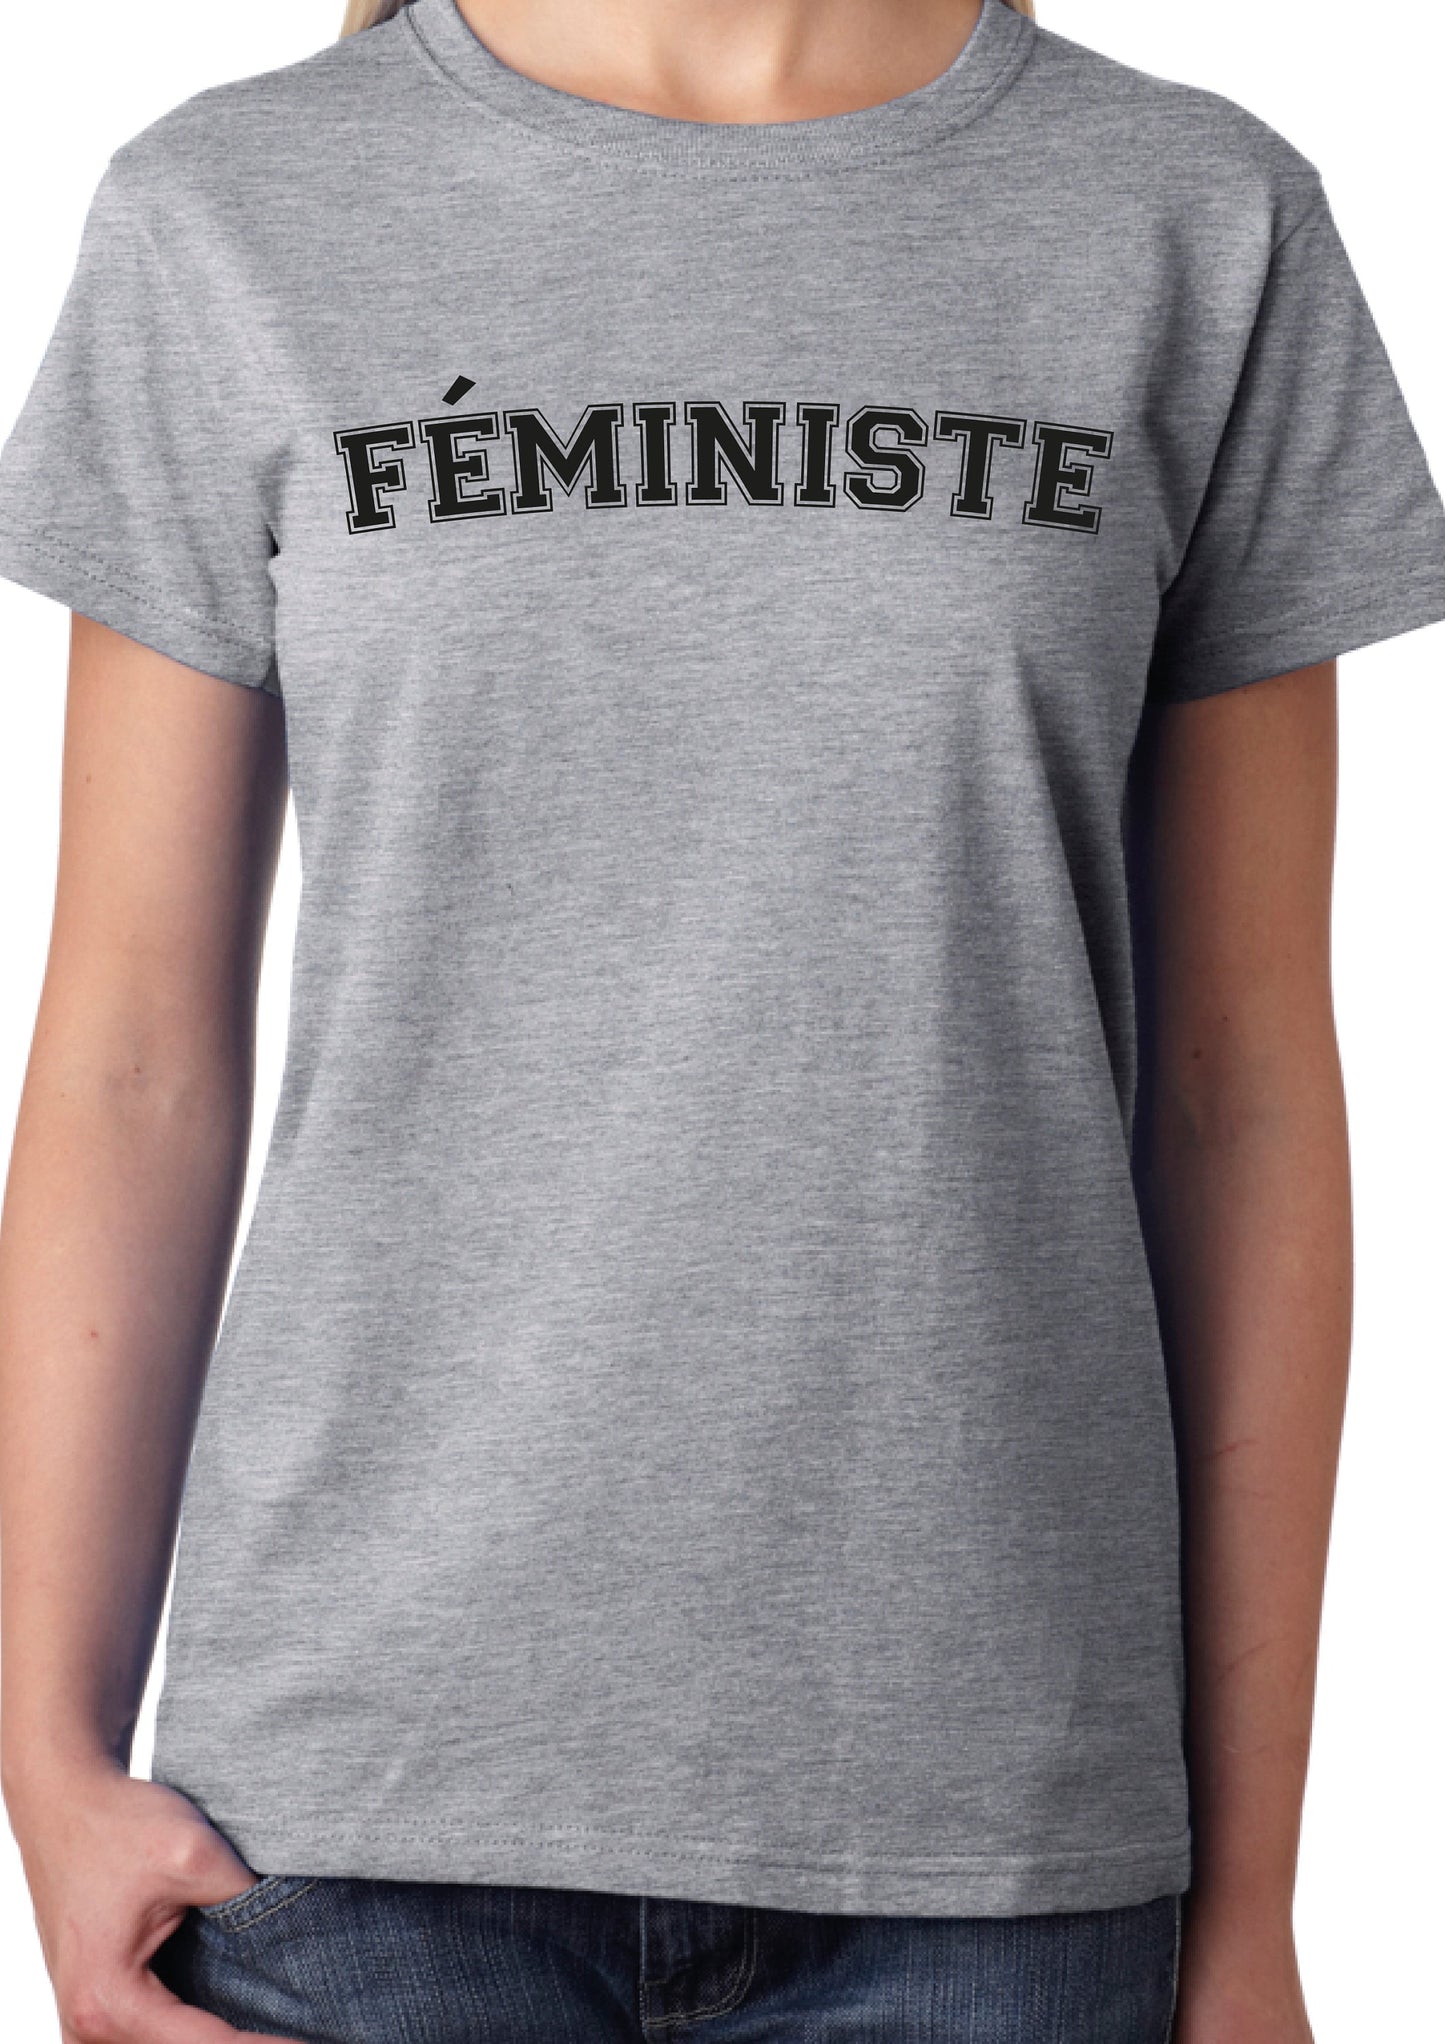 Fministe T-Shirt, Varsity Slogan Statement Tee Ladies or Unisex, French, Franais